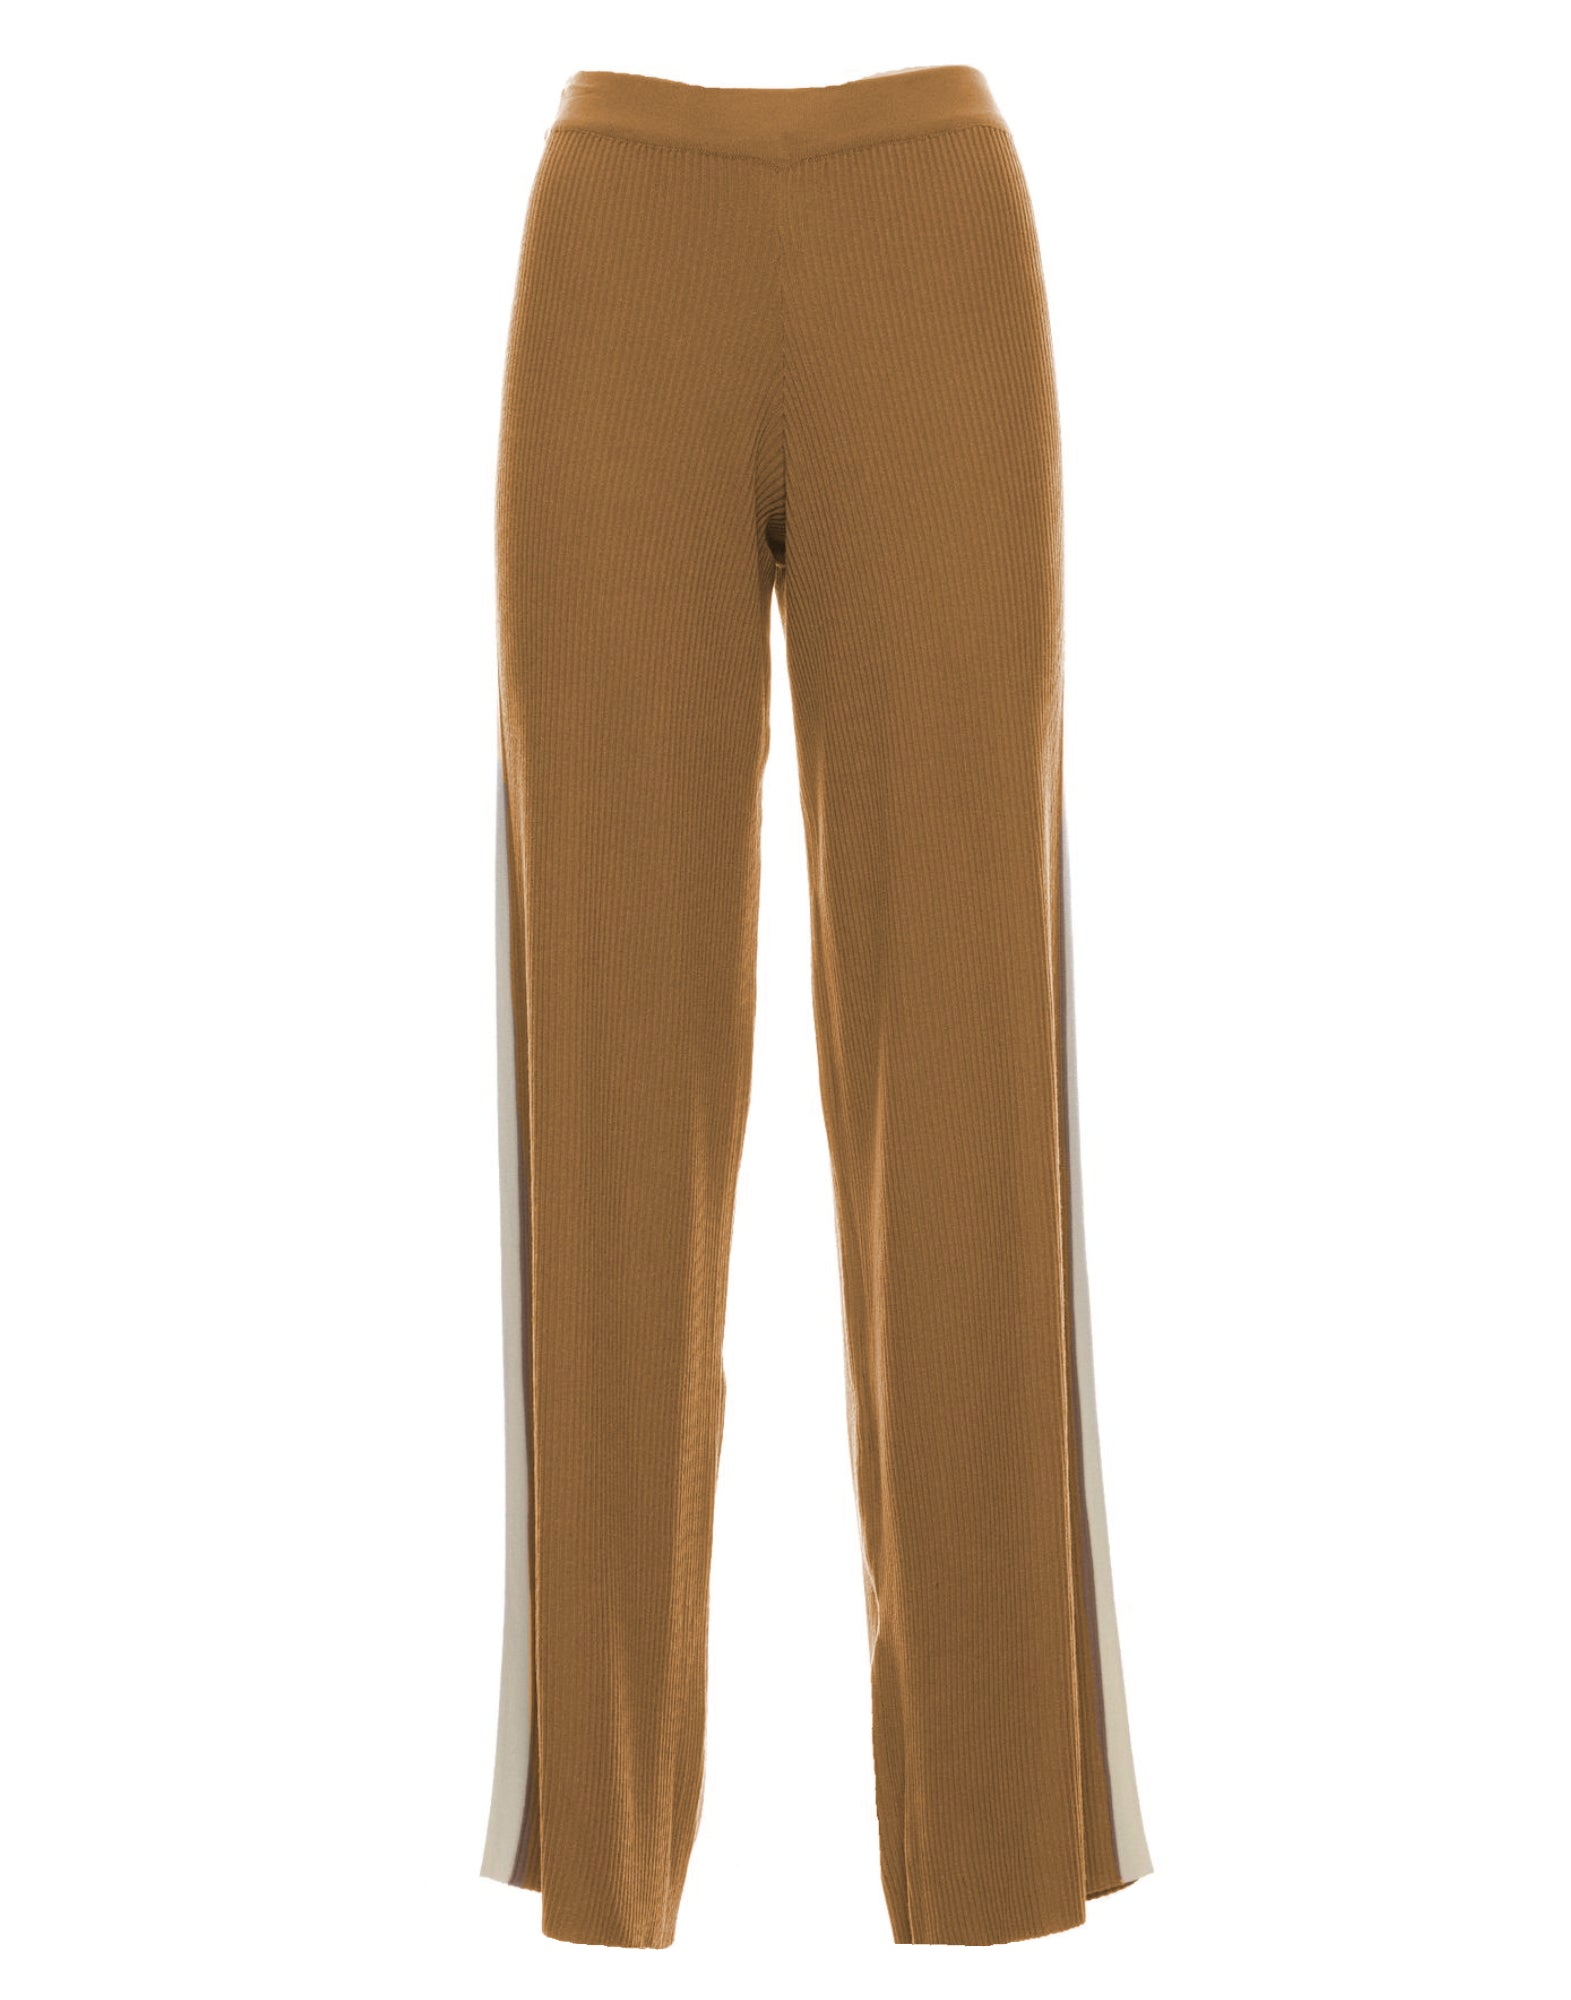 Pantalon femme ptkd01018 beige Akep